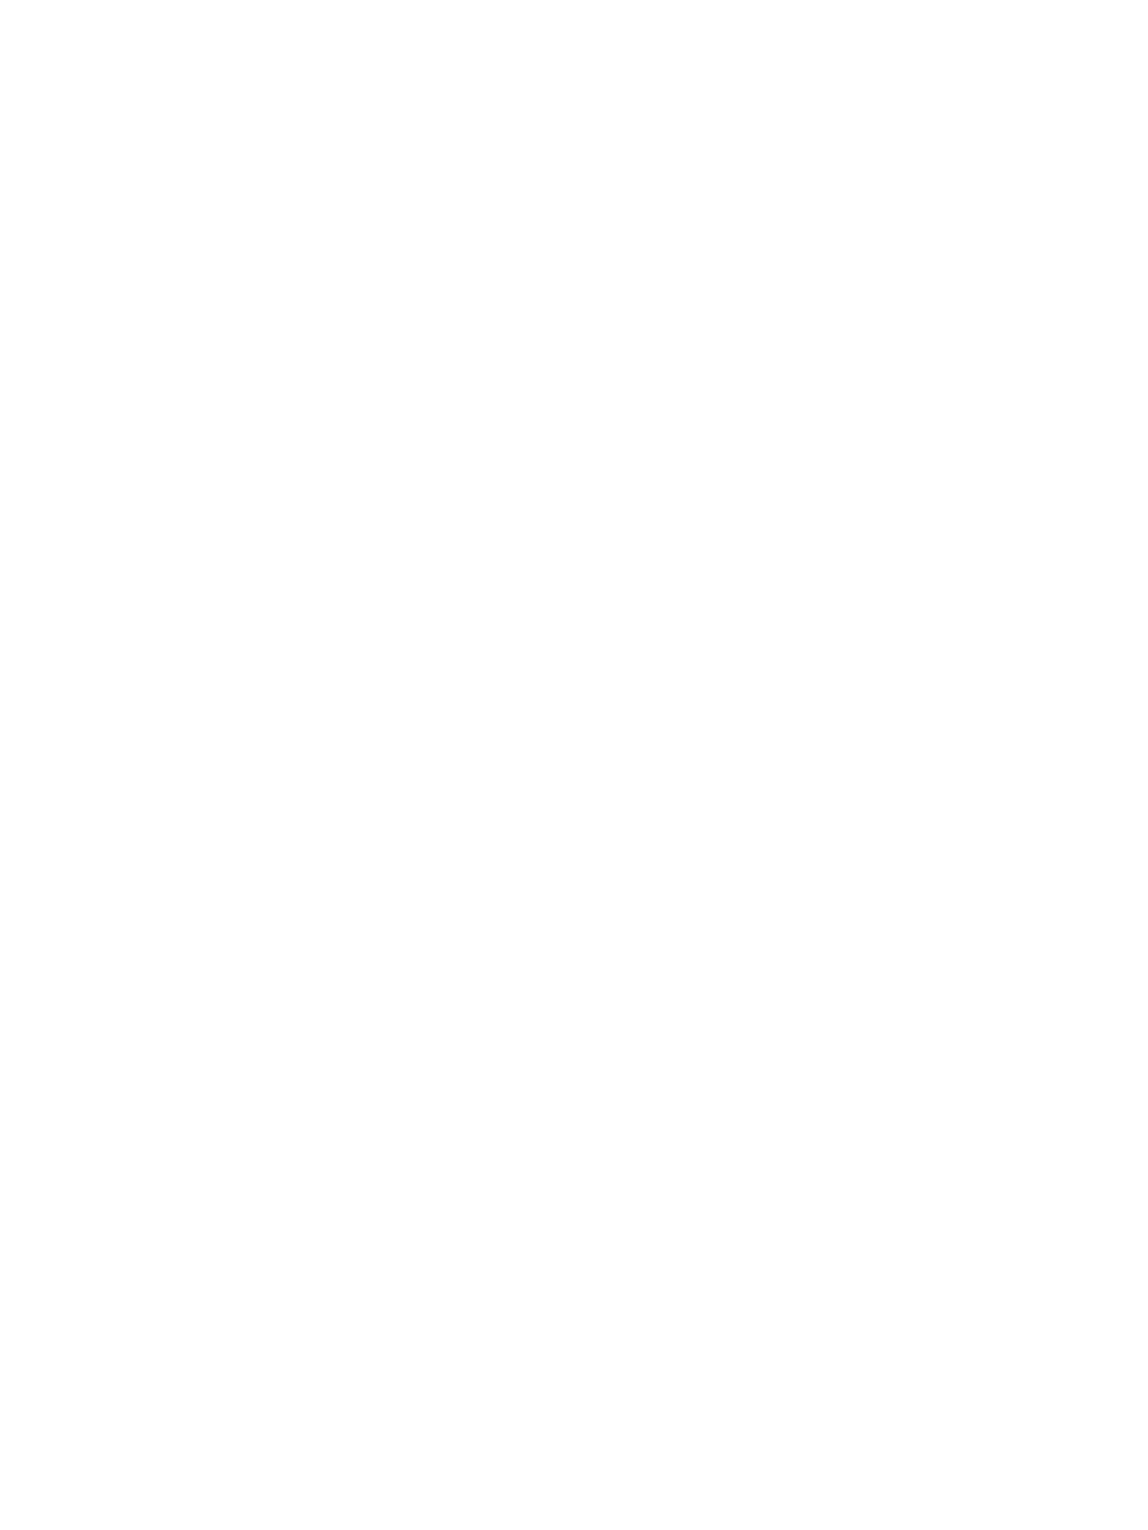 PTT Global Chemical logo pour fonds sombres (PNG transparent)